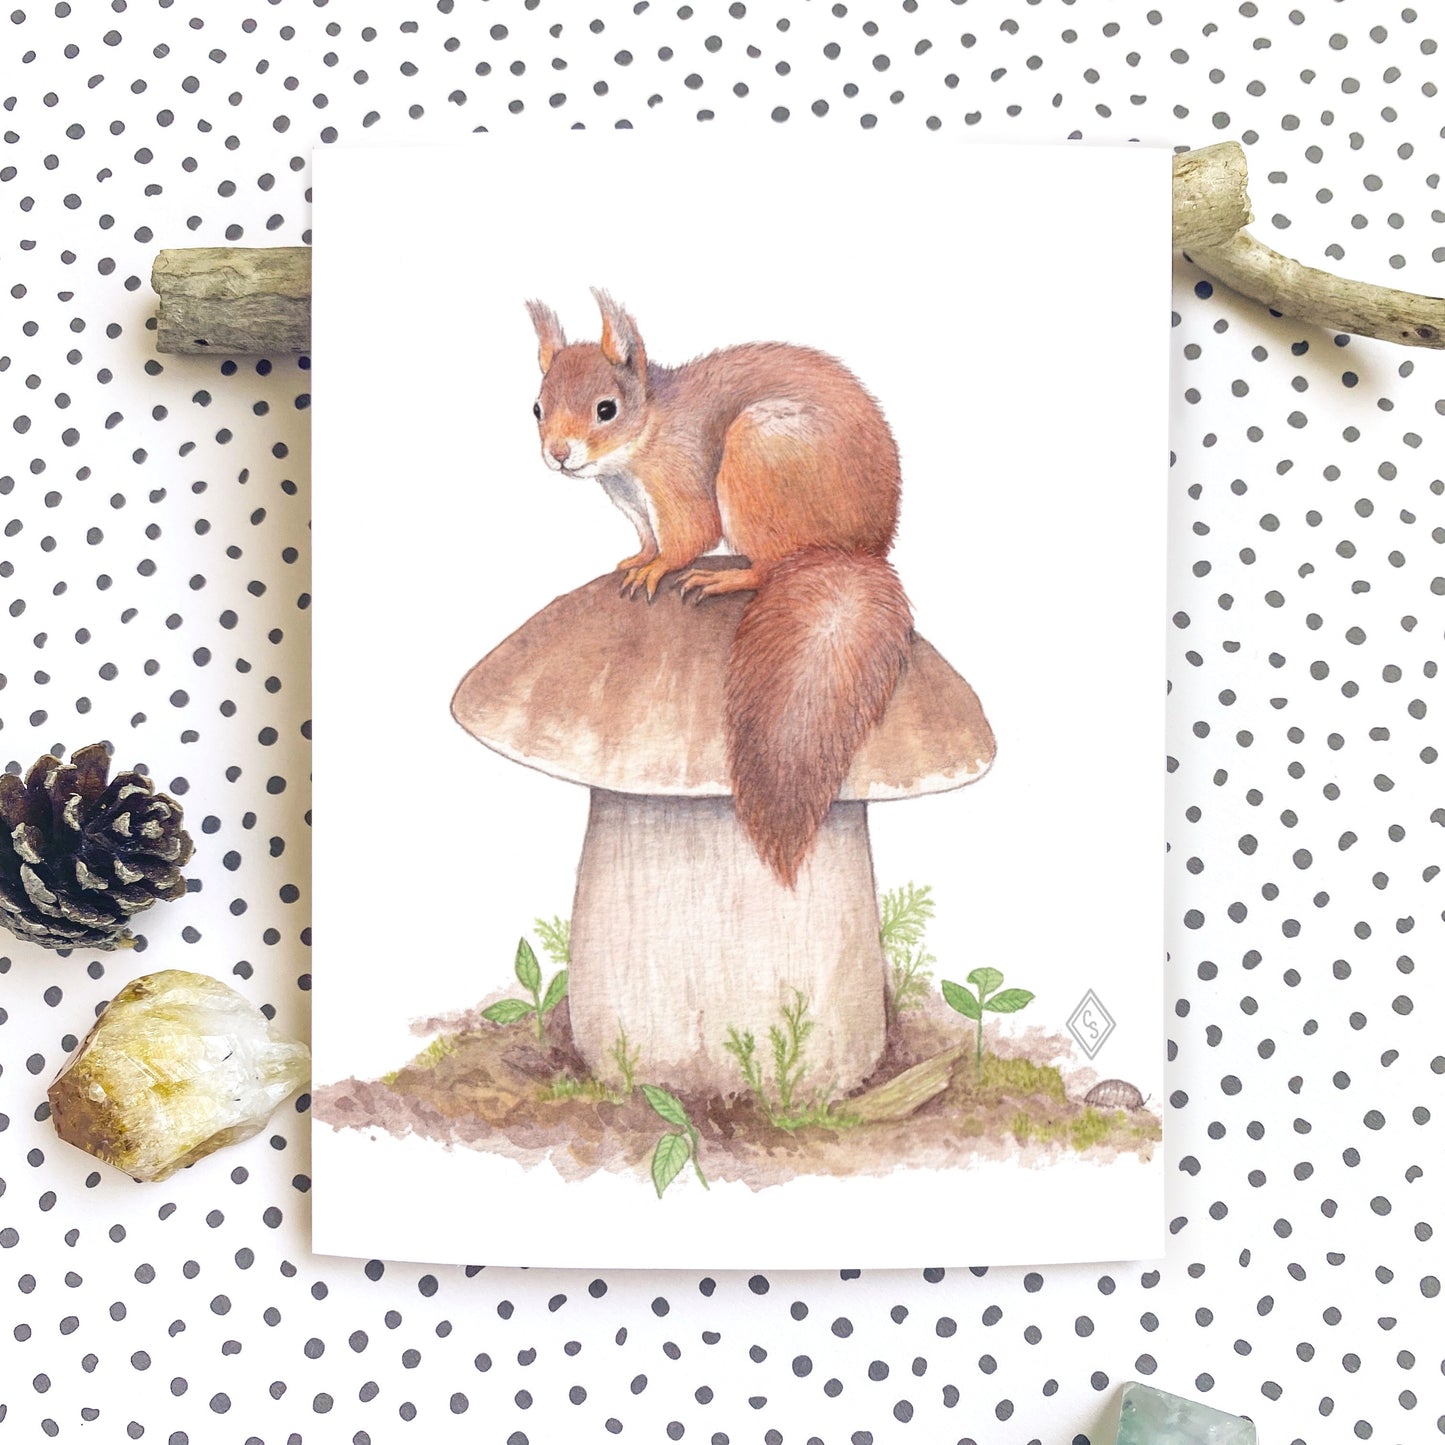 Red Squirrel & King Bolete Mushroom - Greeting Card